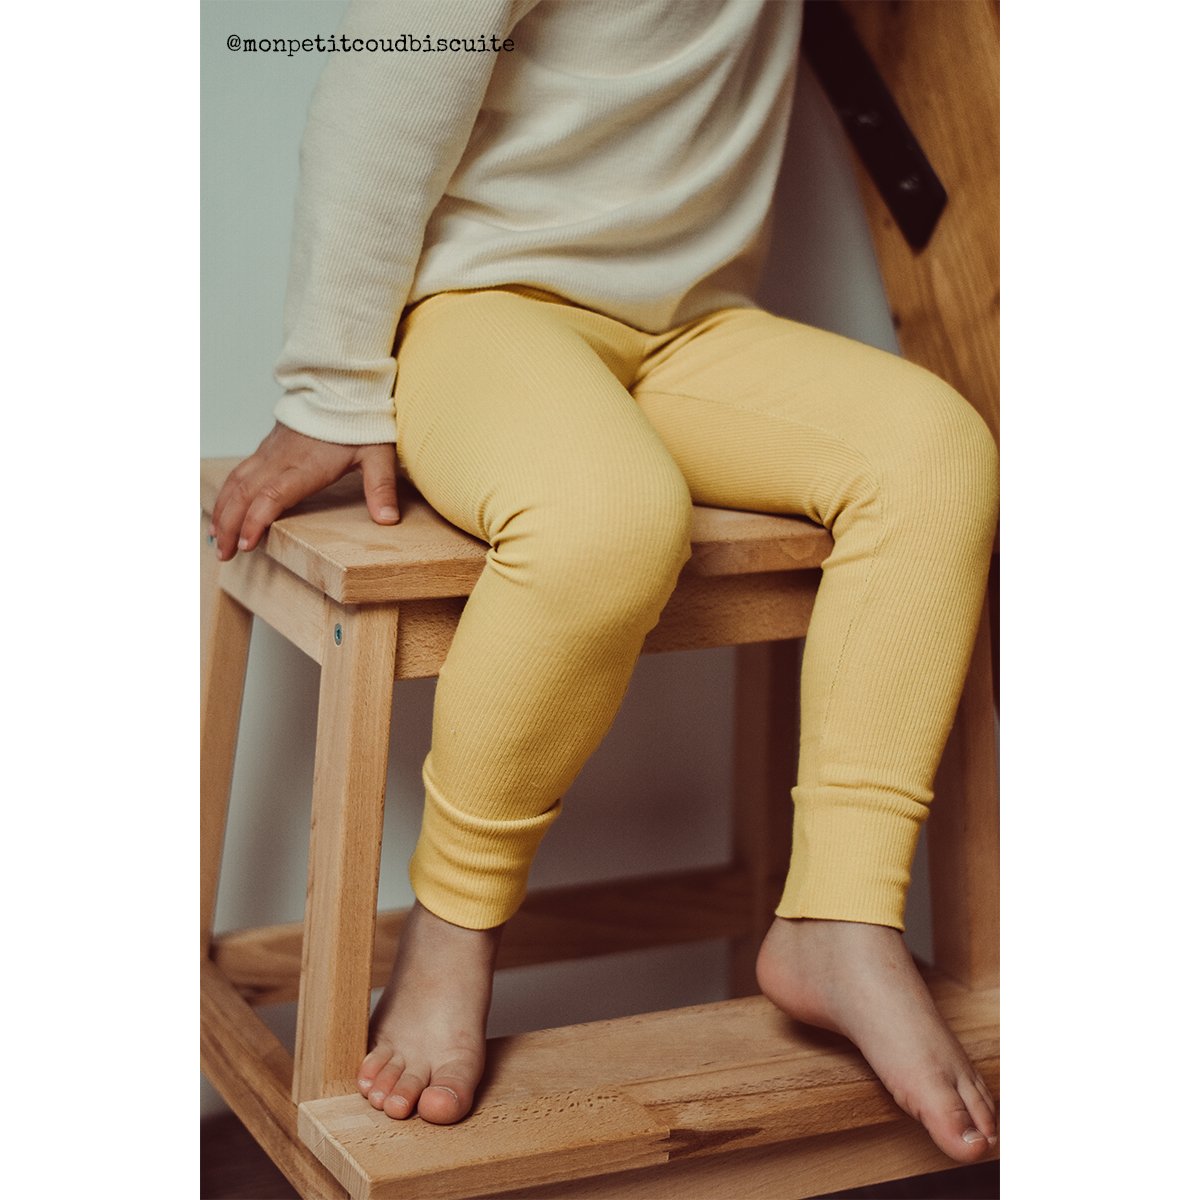 Ikatee - SEATTLE Kids Legging Jegging - 3-12Y - Paper Sewing Pattern